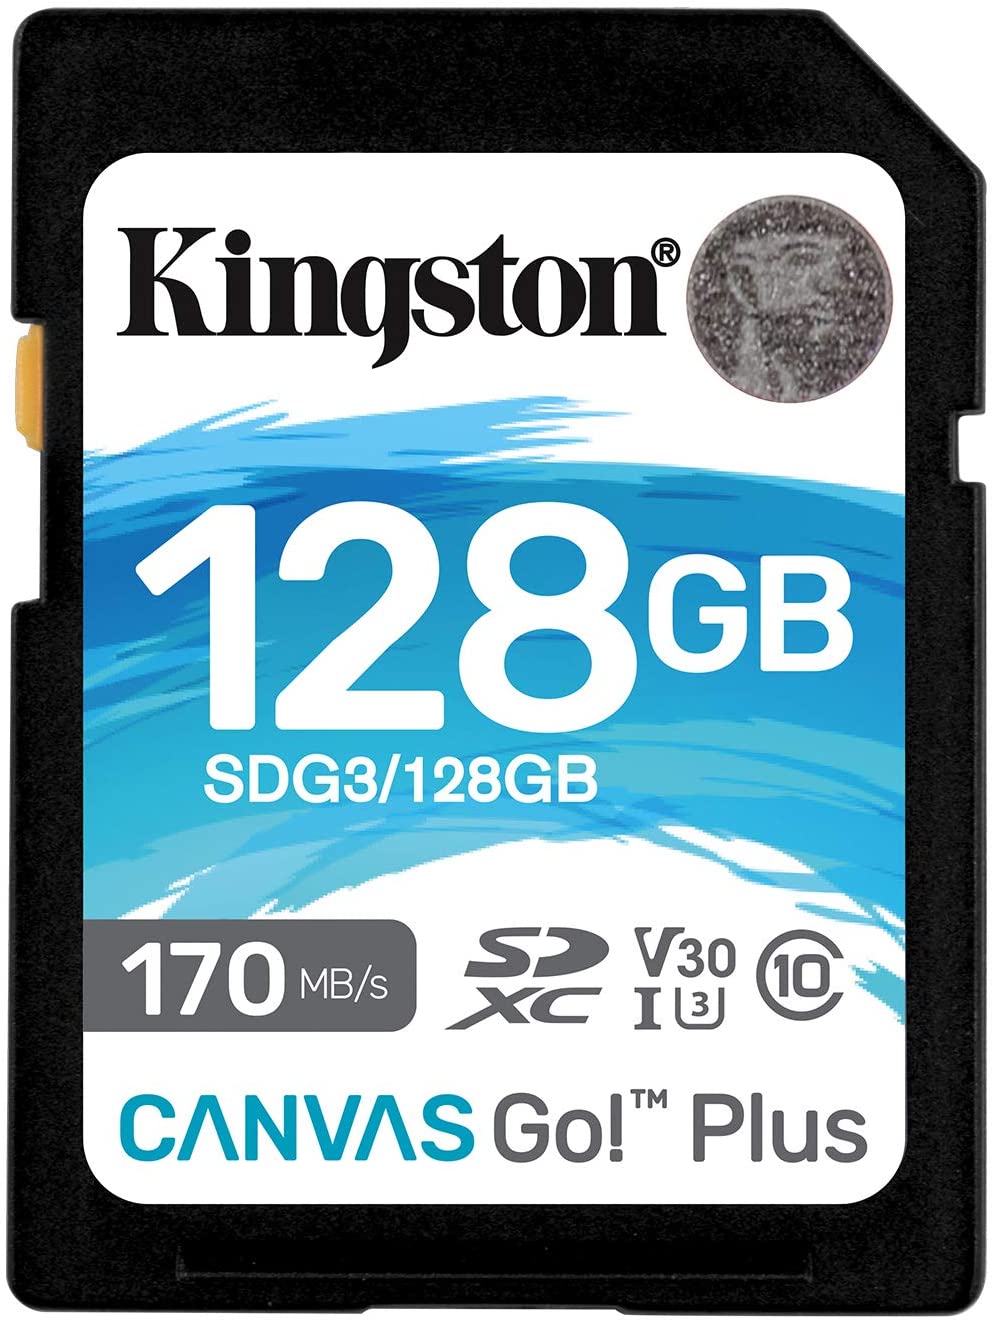 Kingston Canvas Go Plus 128GB SD Card